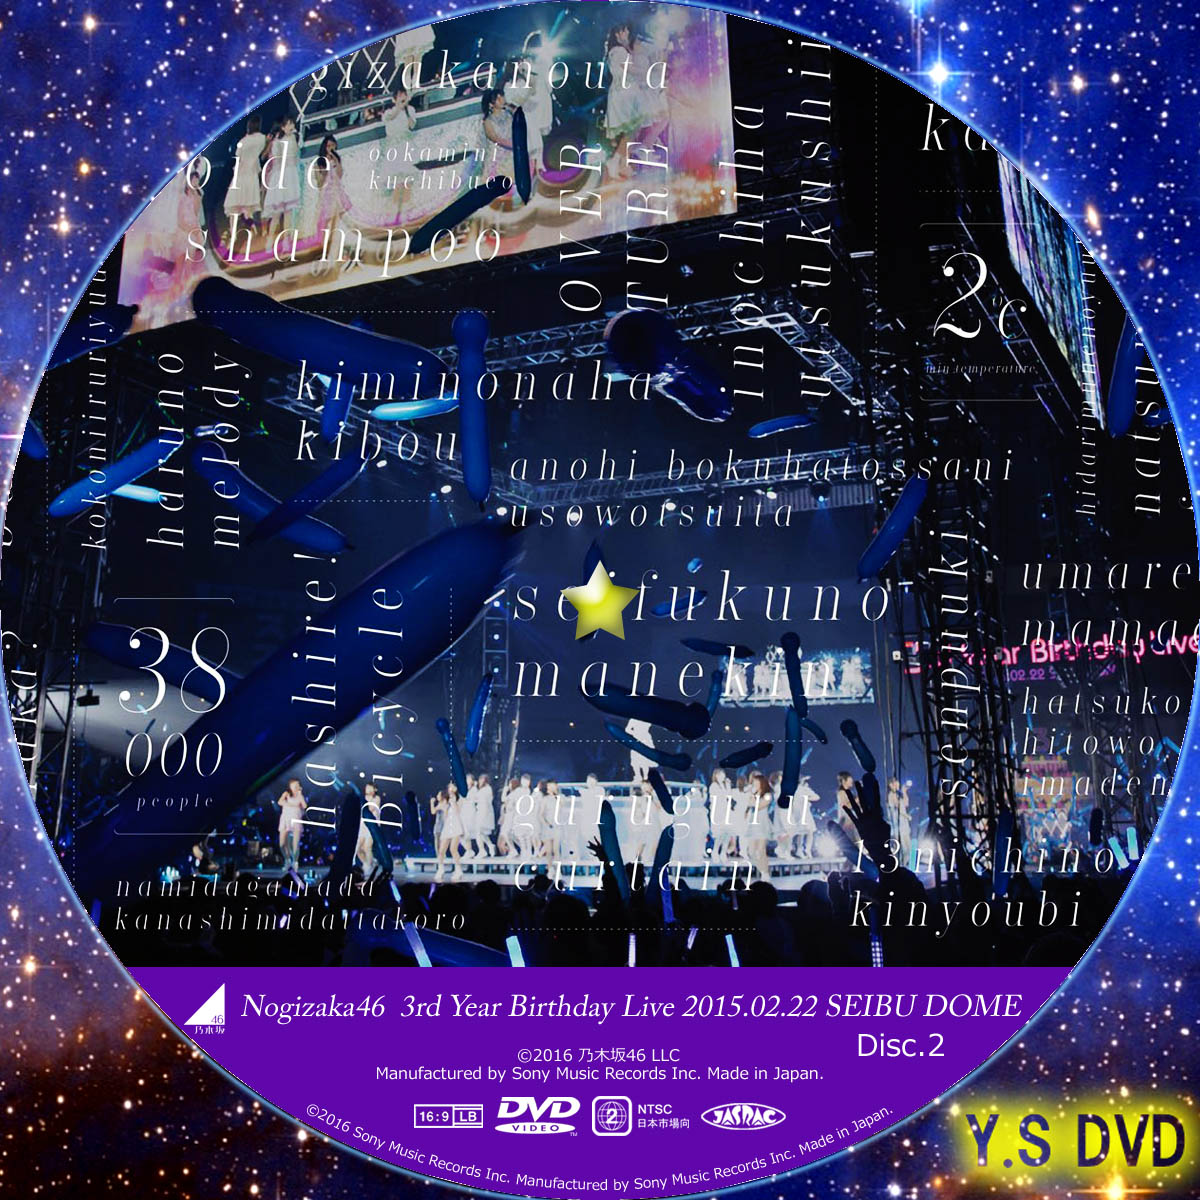 乃木坂46 3rd YEAR BIRTHDAY LIVE 2015 DVD